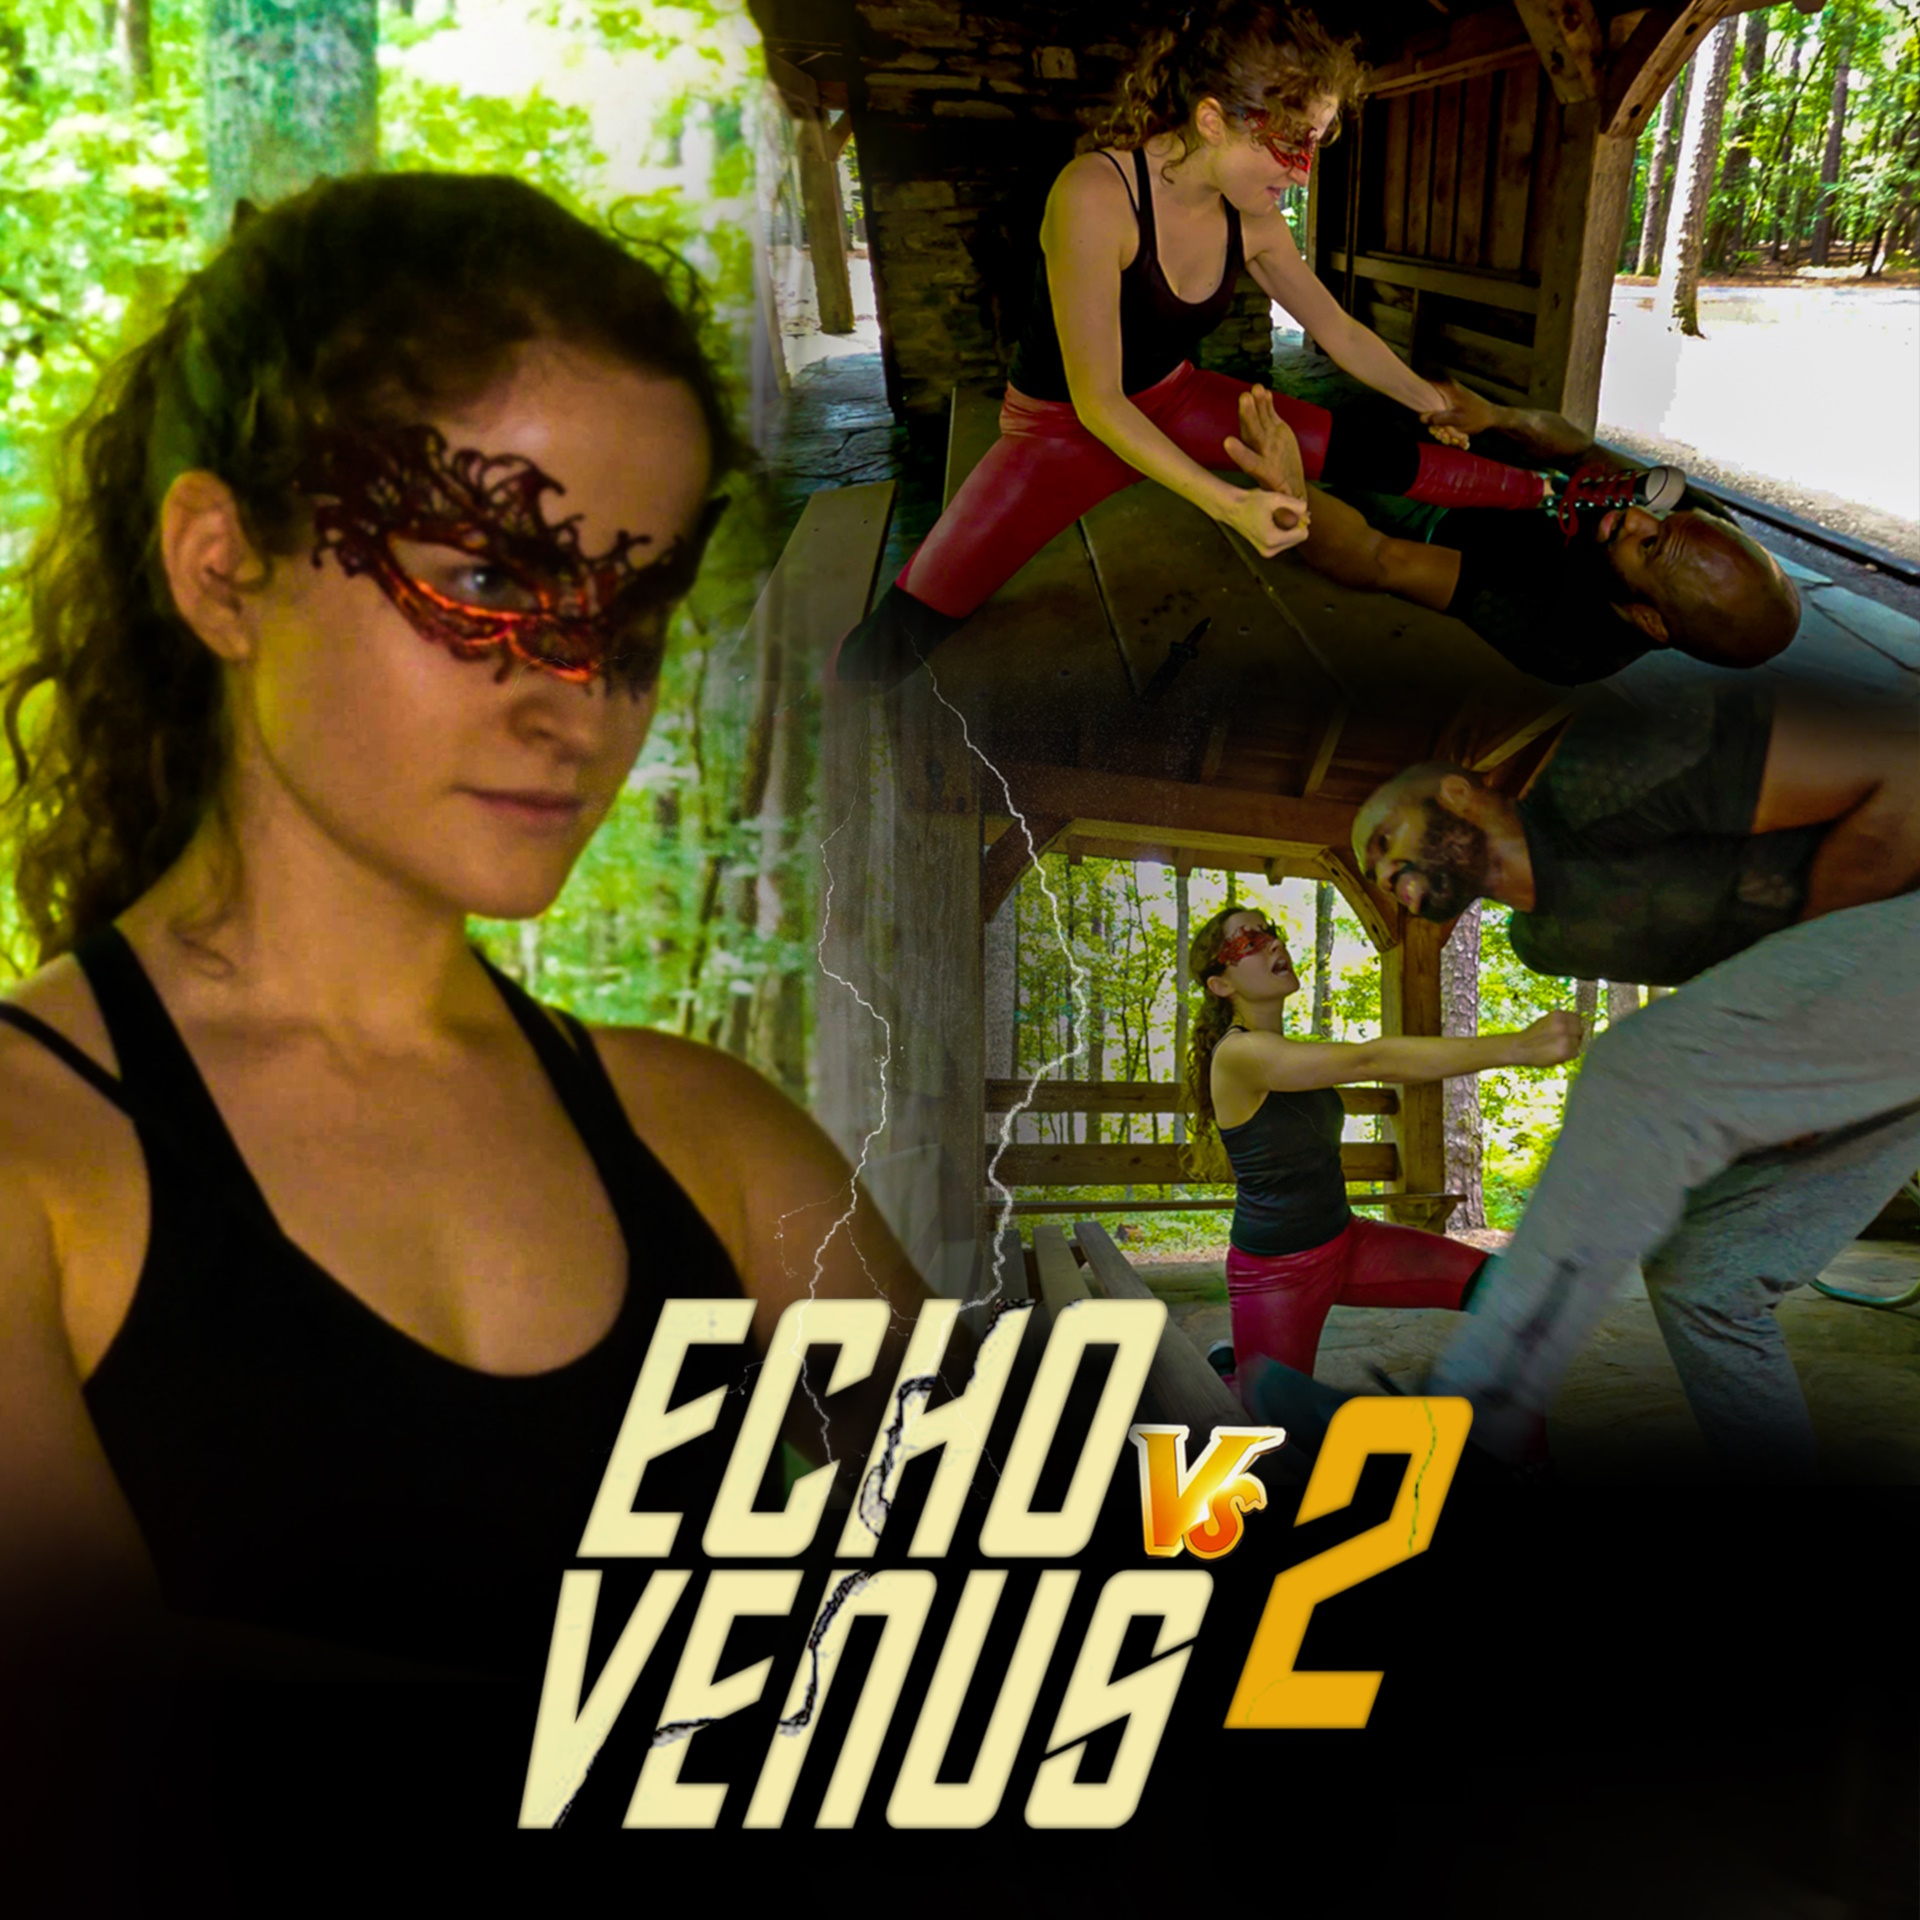 #1 - Echo vs. Venus 2: The Bounty